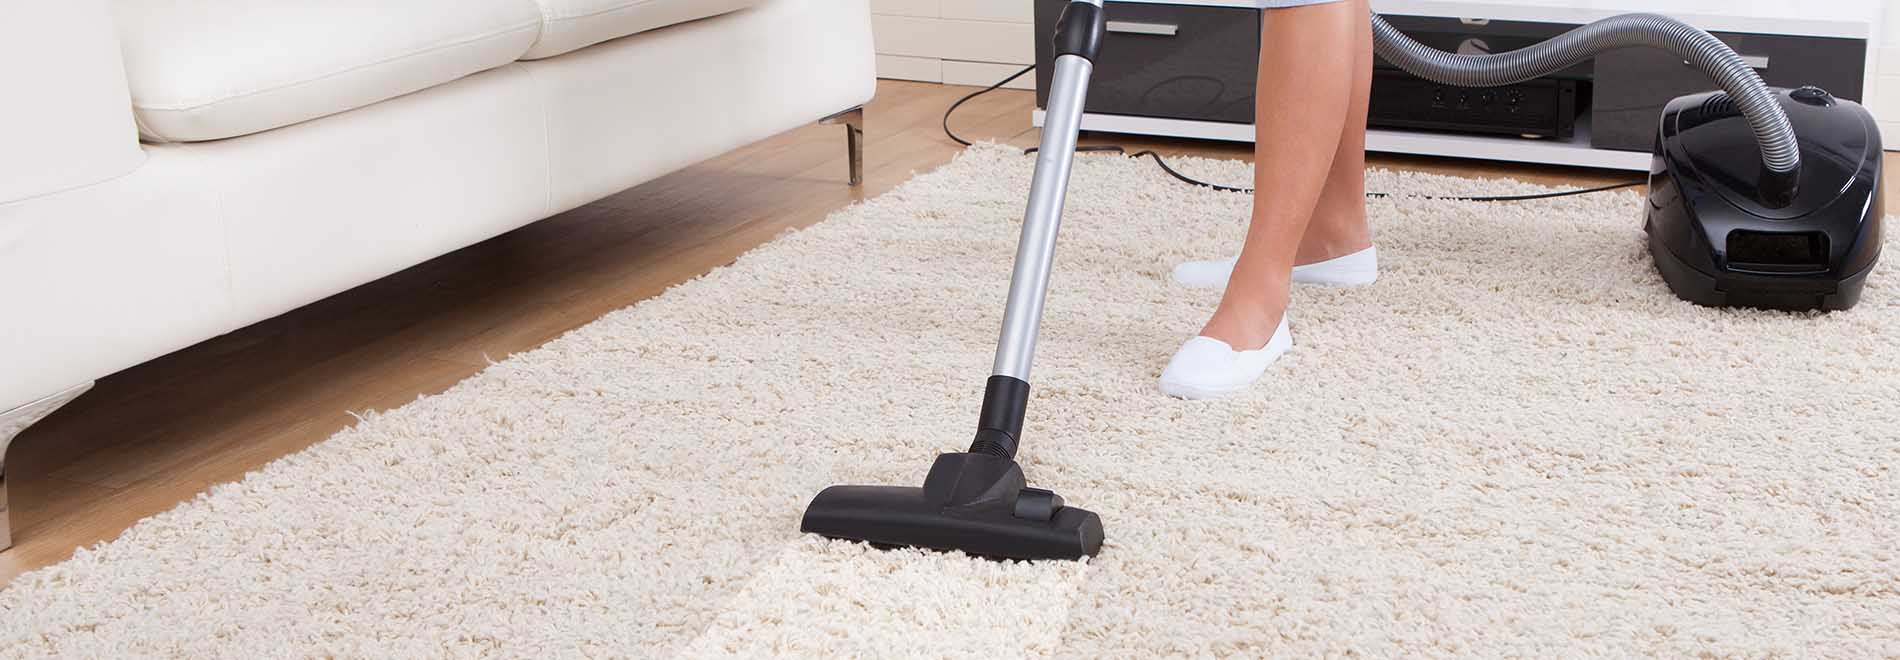 Carpet Cleaners Marylebone